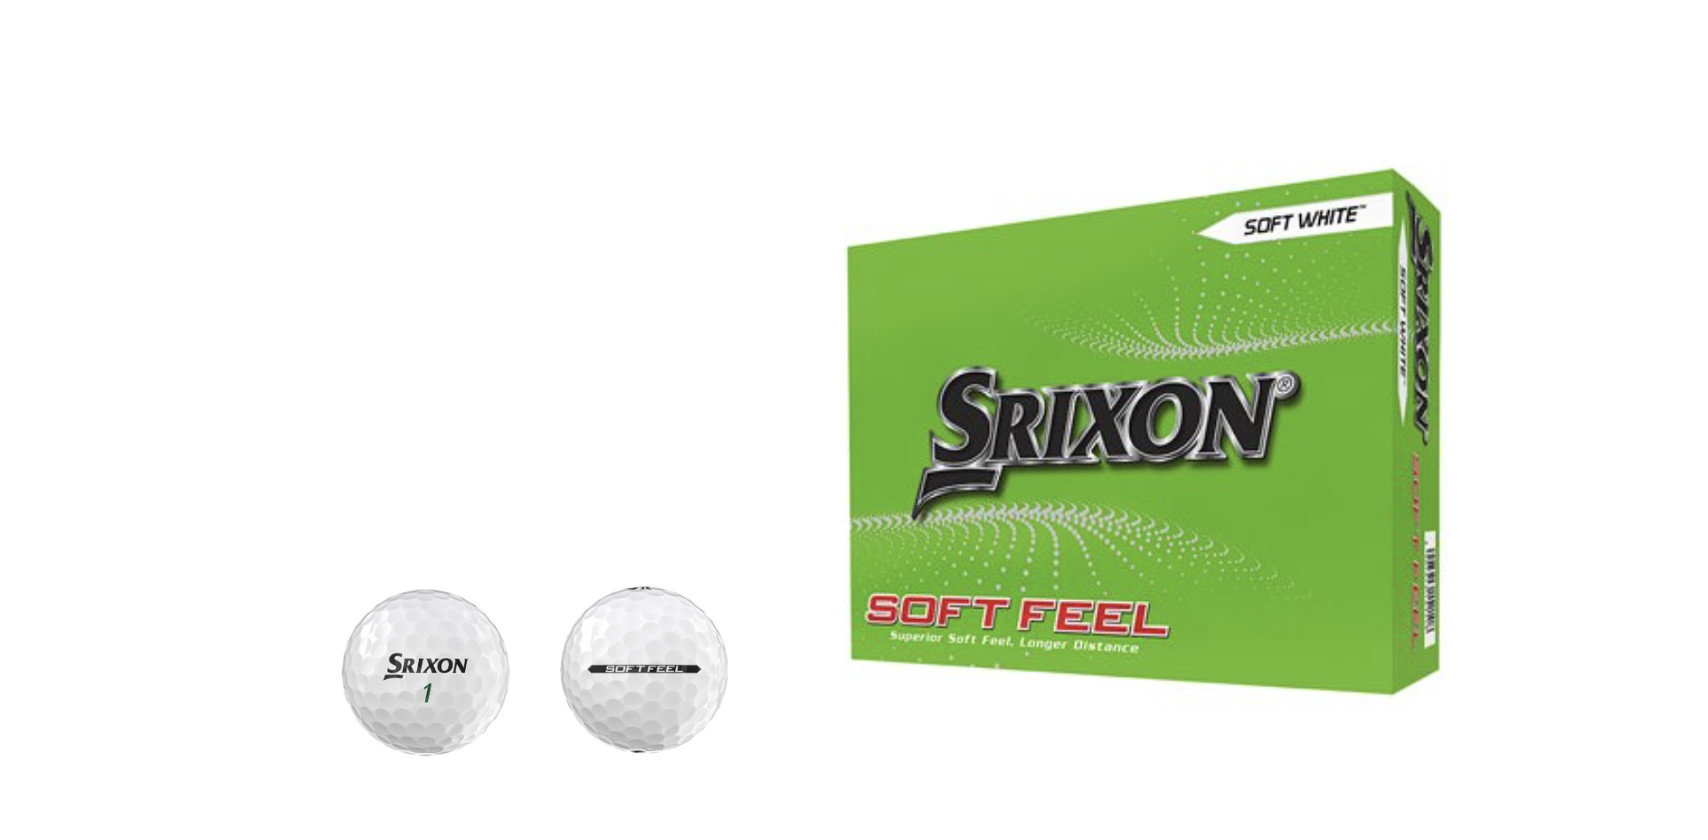 Srixon Soft feel golf ball review header